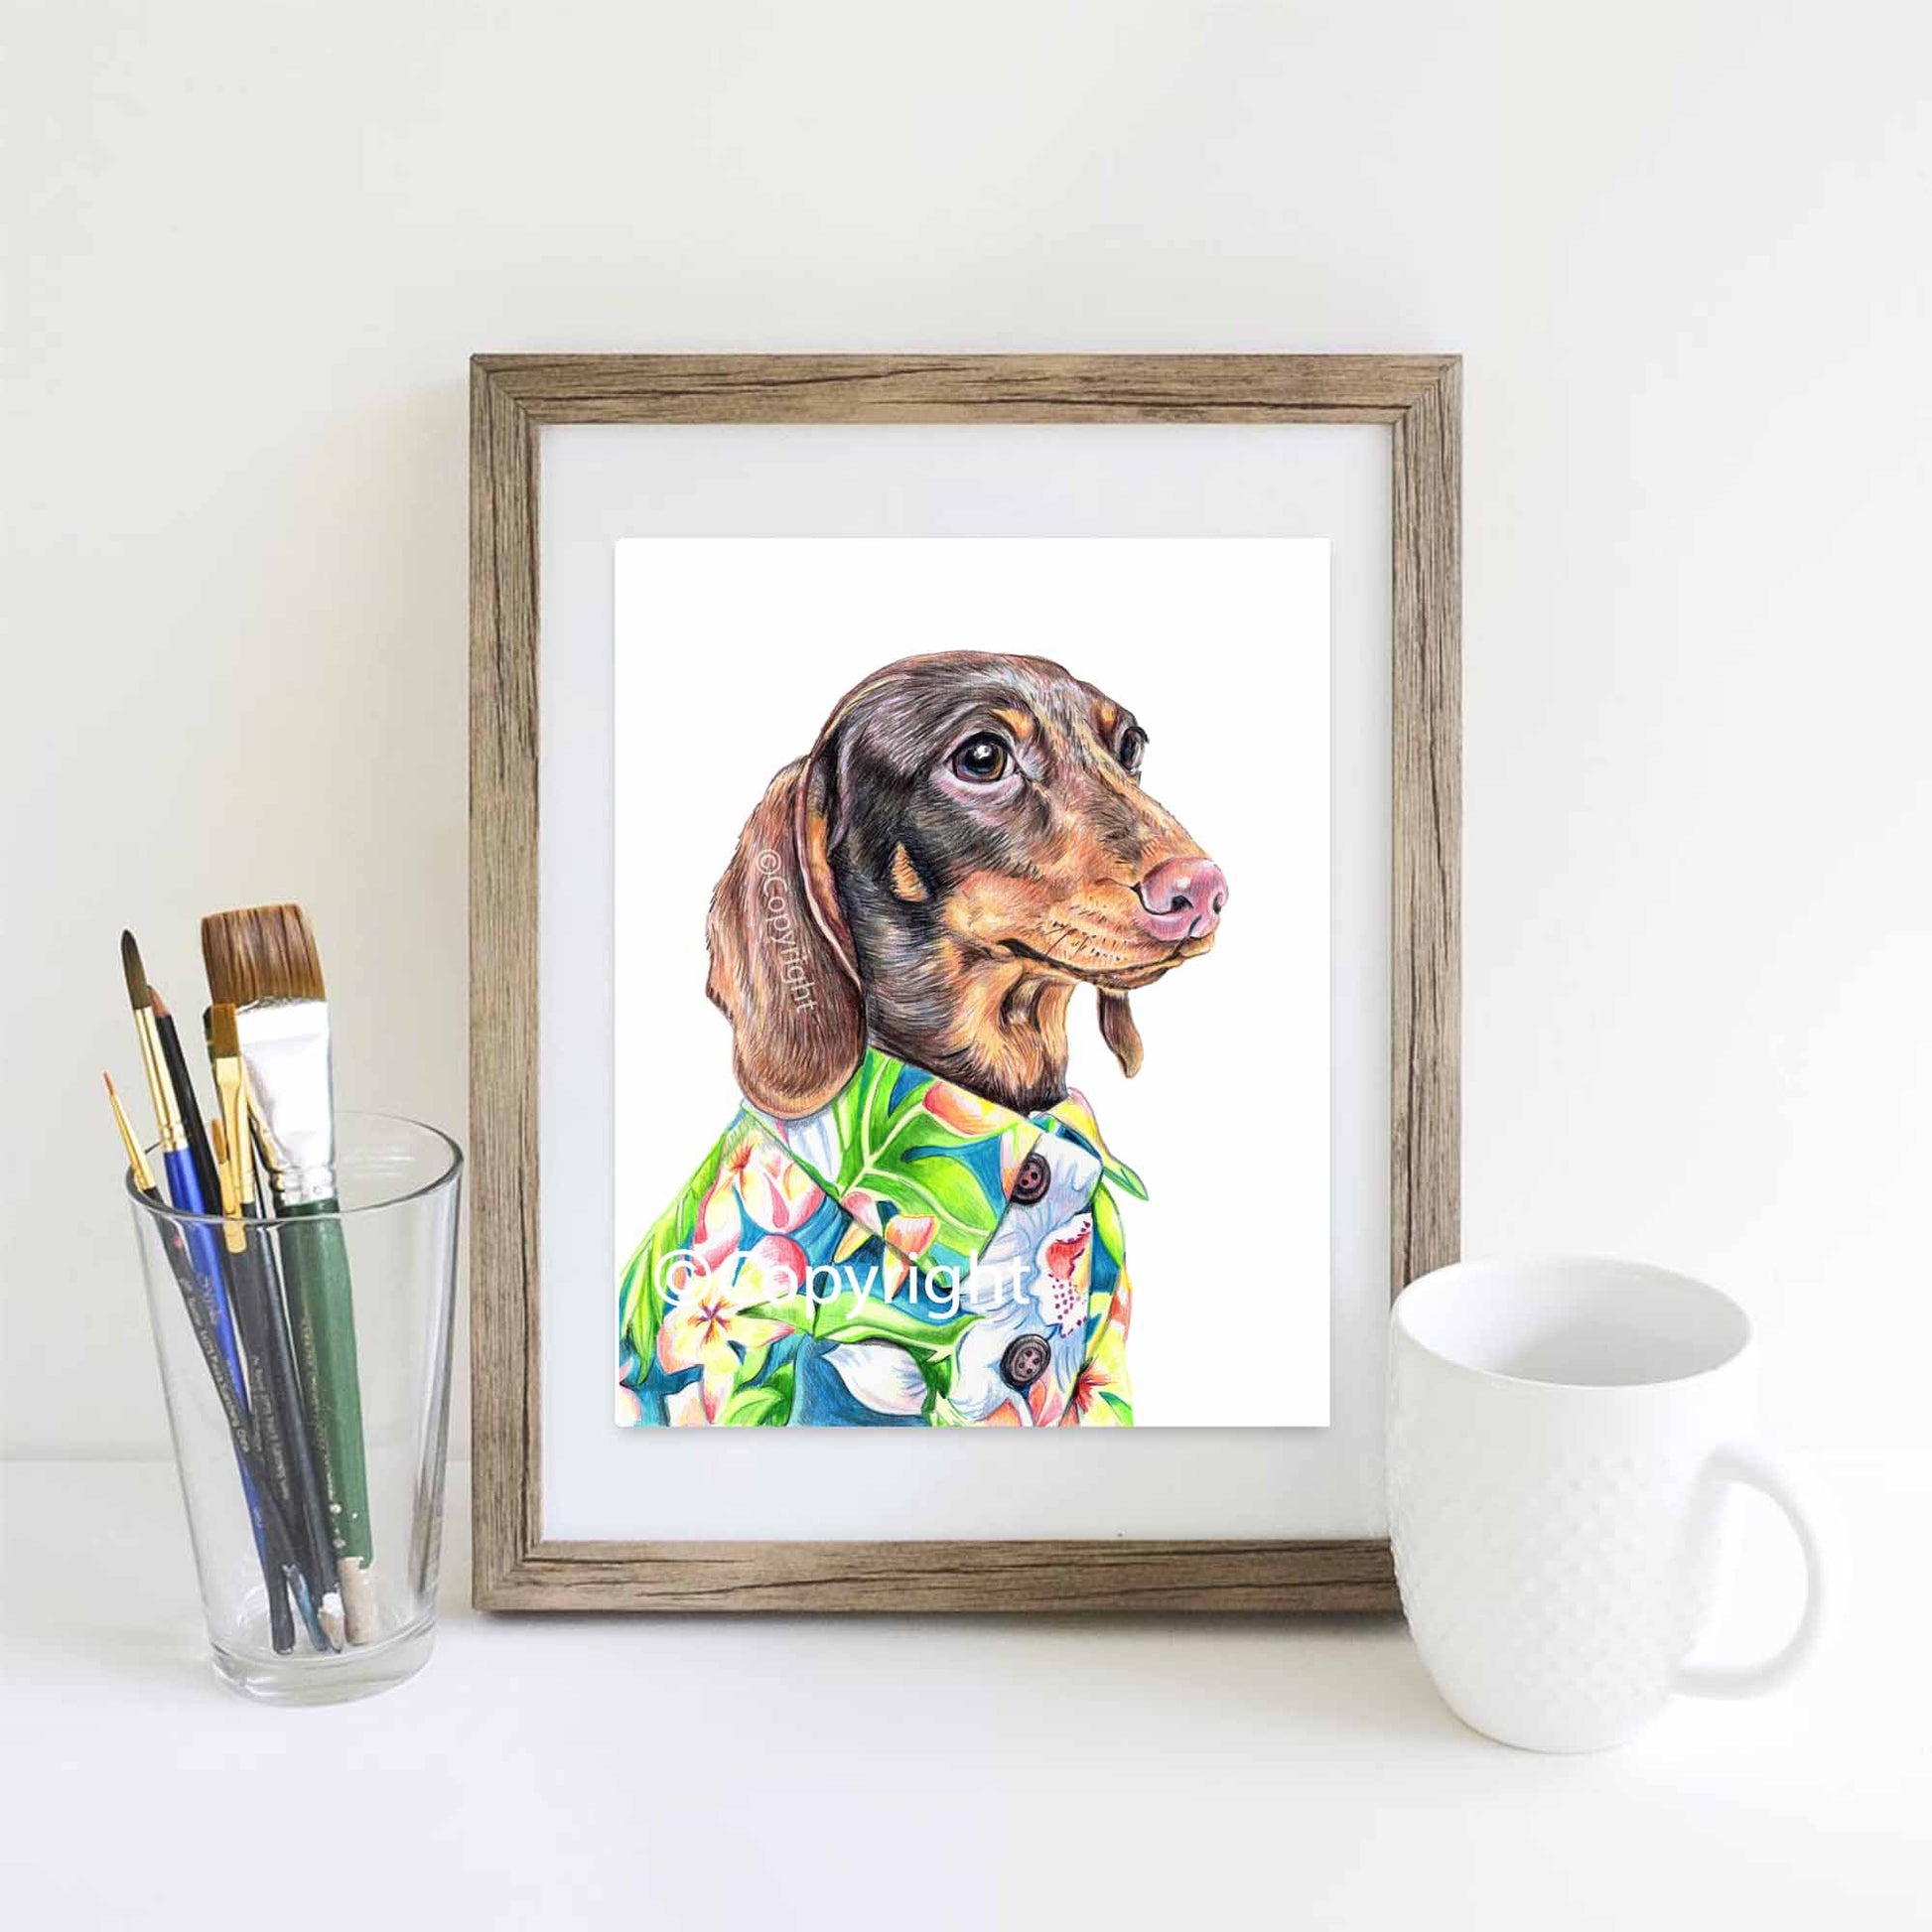 Coloured pencil drawing of a dachshund dog wearing a bright green and blue Hawaiian shirt. Art by Deidre Wicks